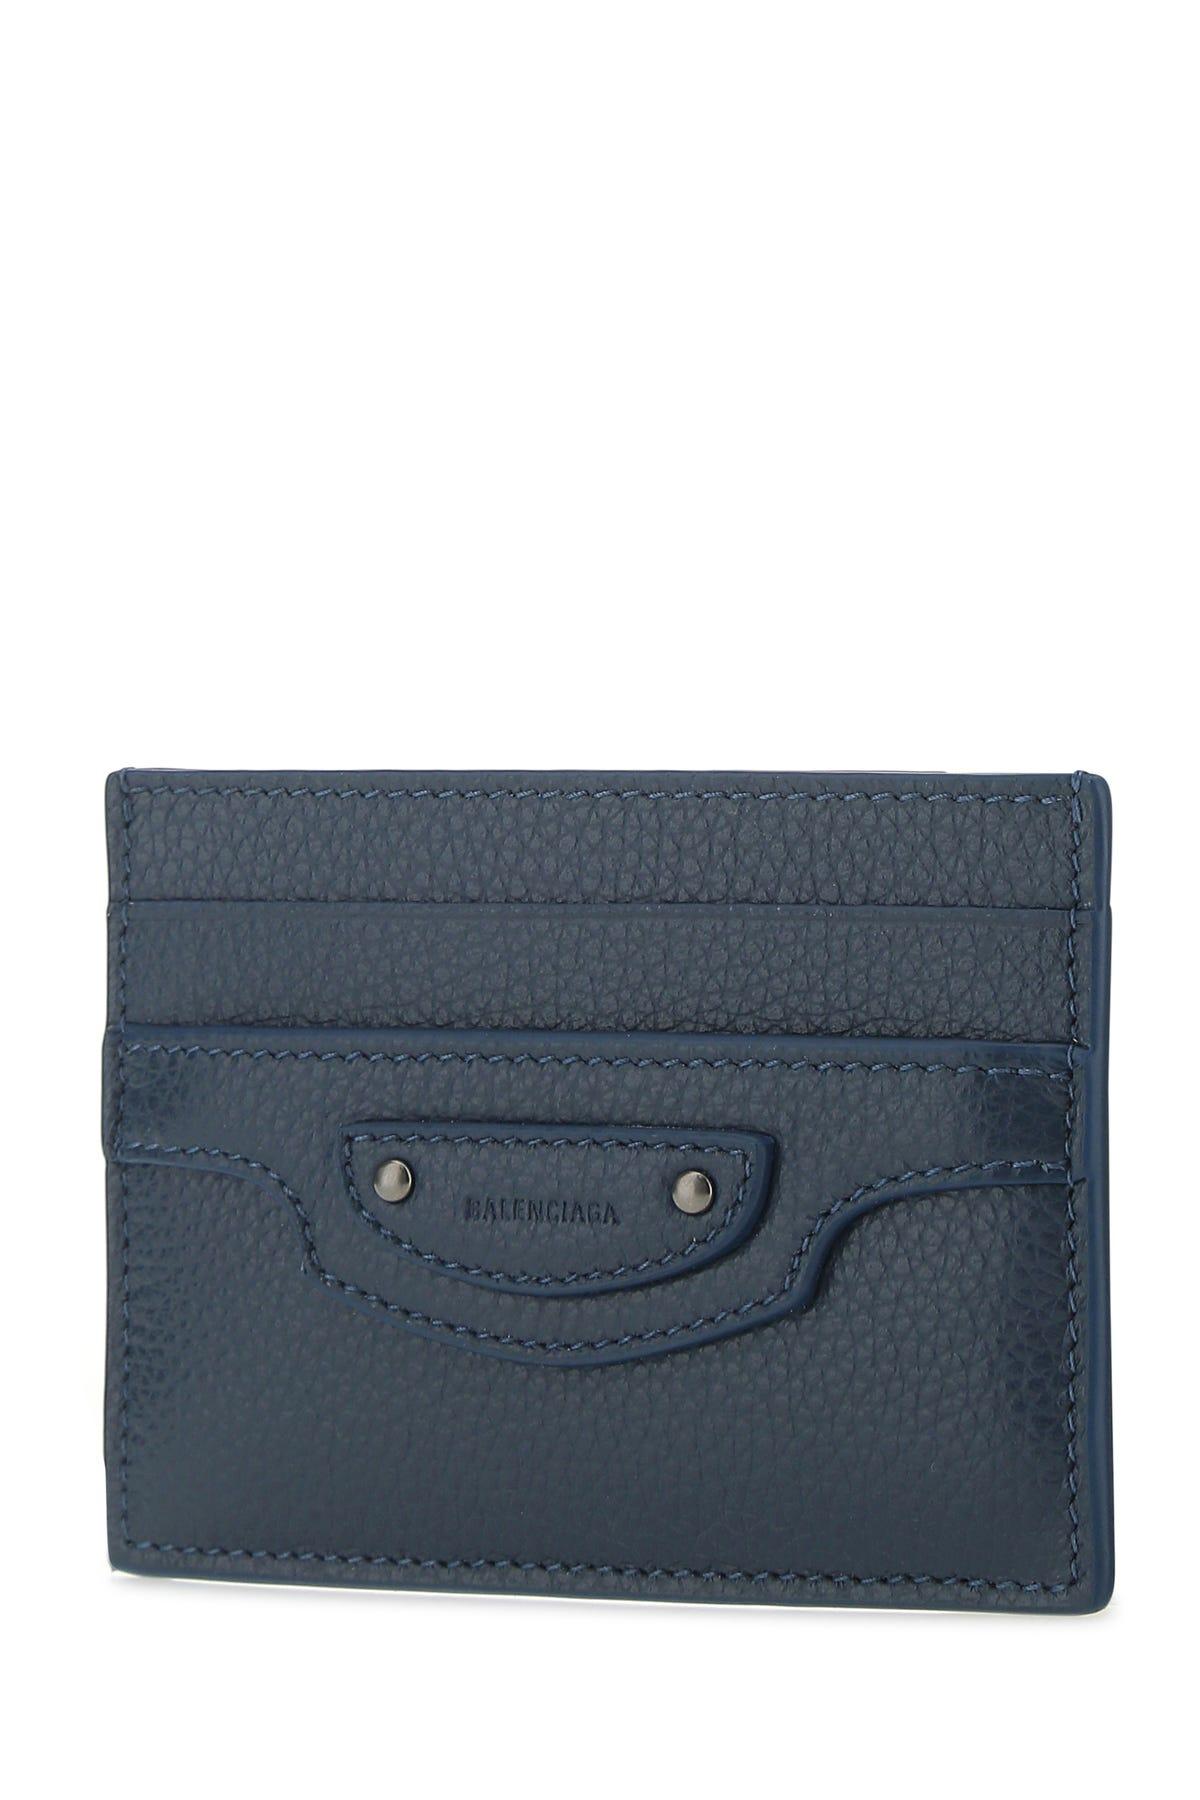 Balenciaga Navy Blue Leather Neo Classic Card Holder